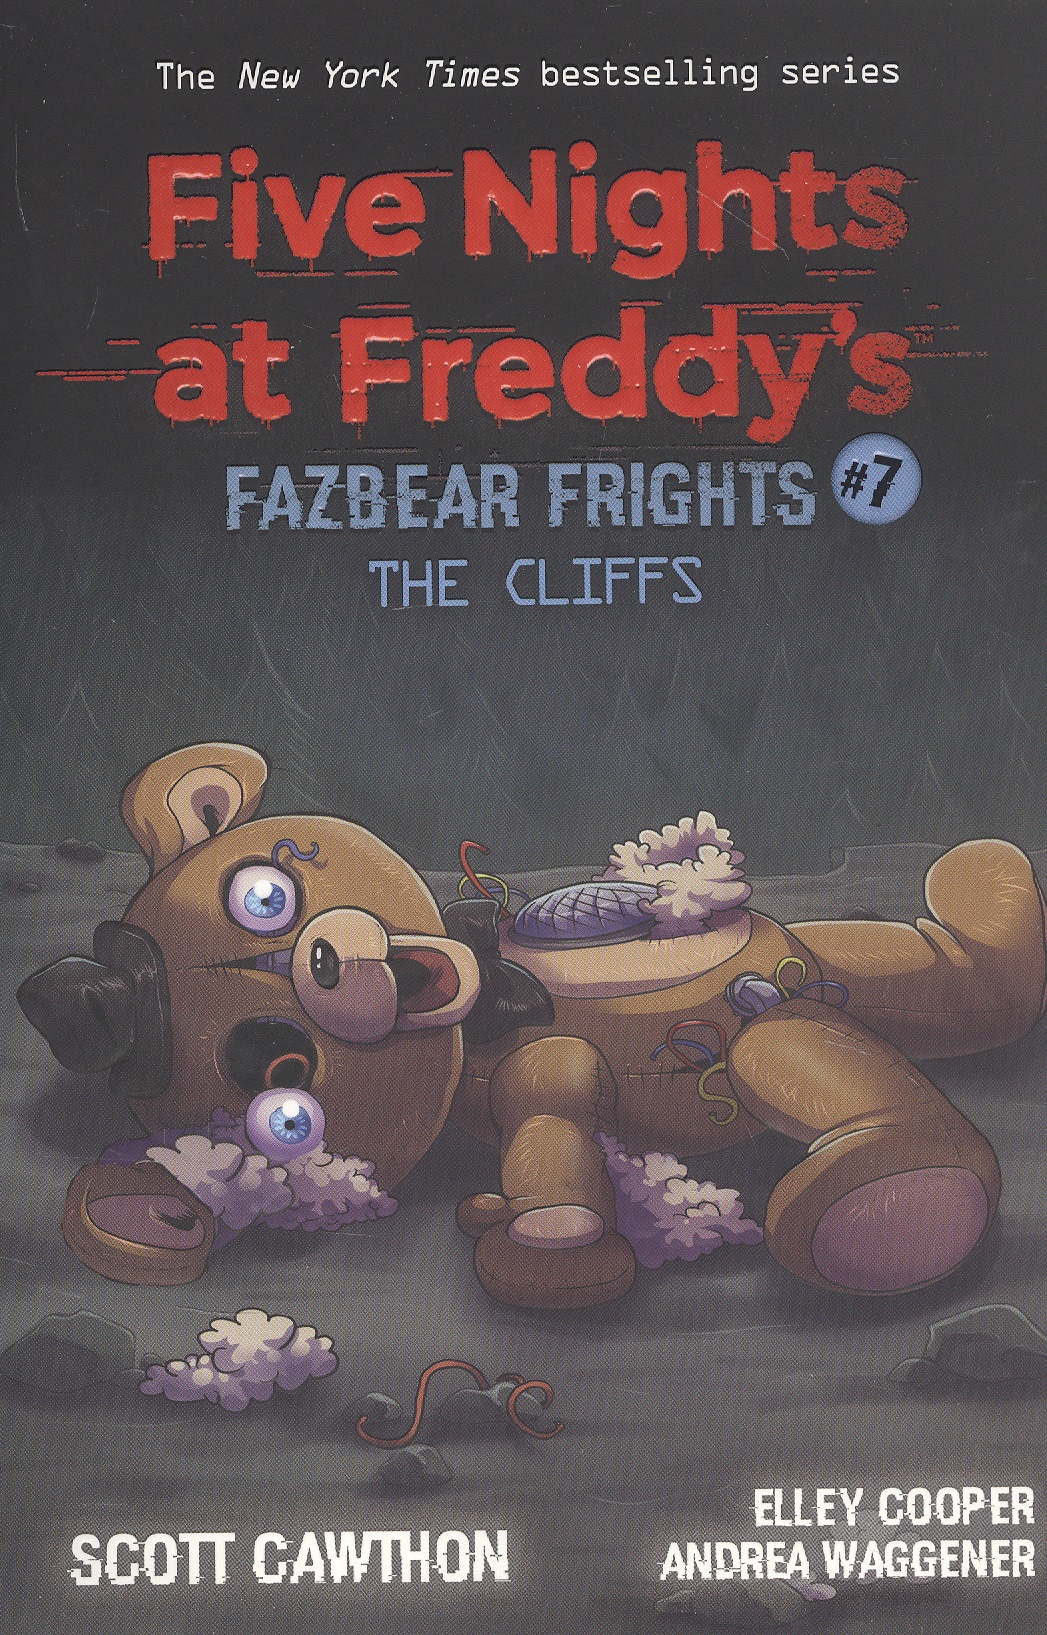 Five nights at freddys: Fazbear Frights #7. The Cliffs